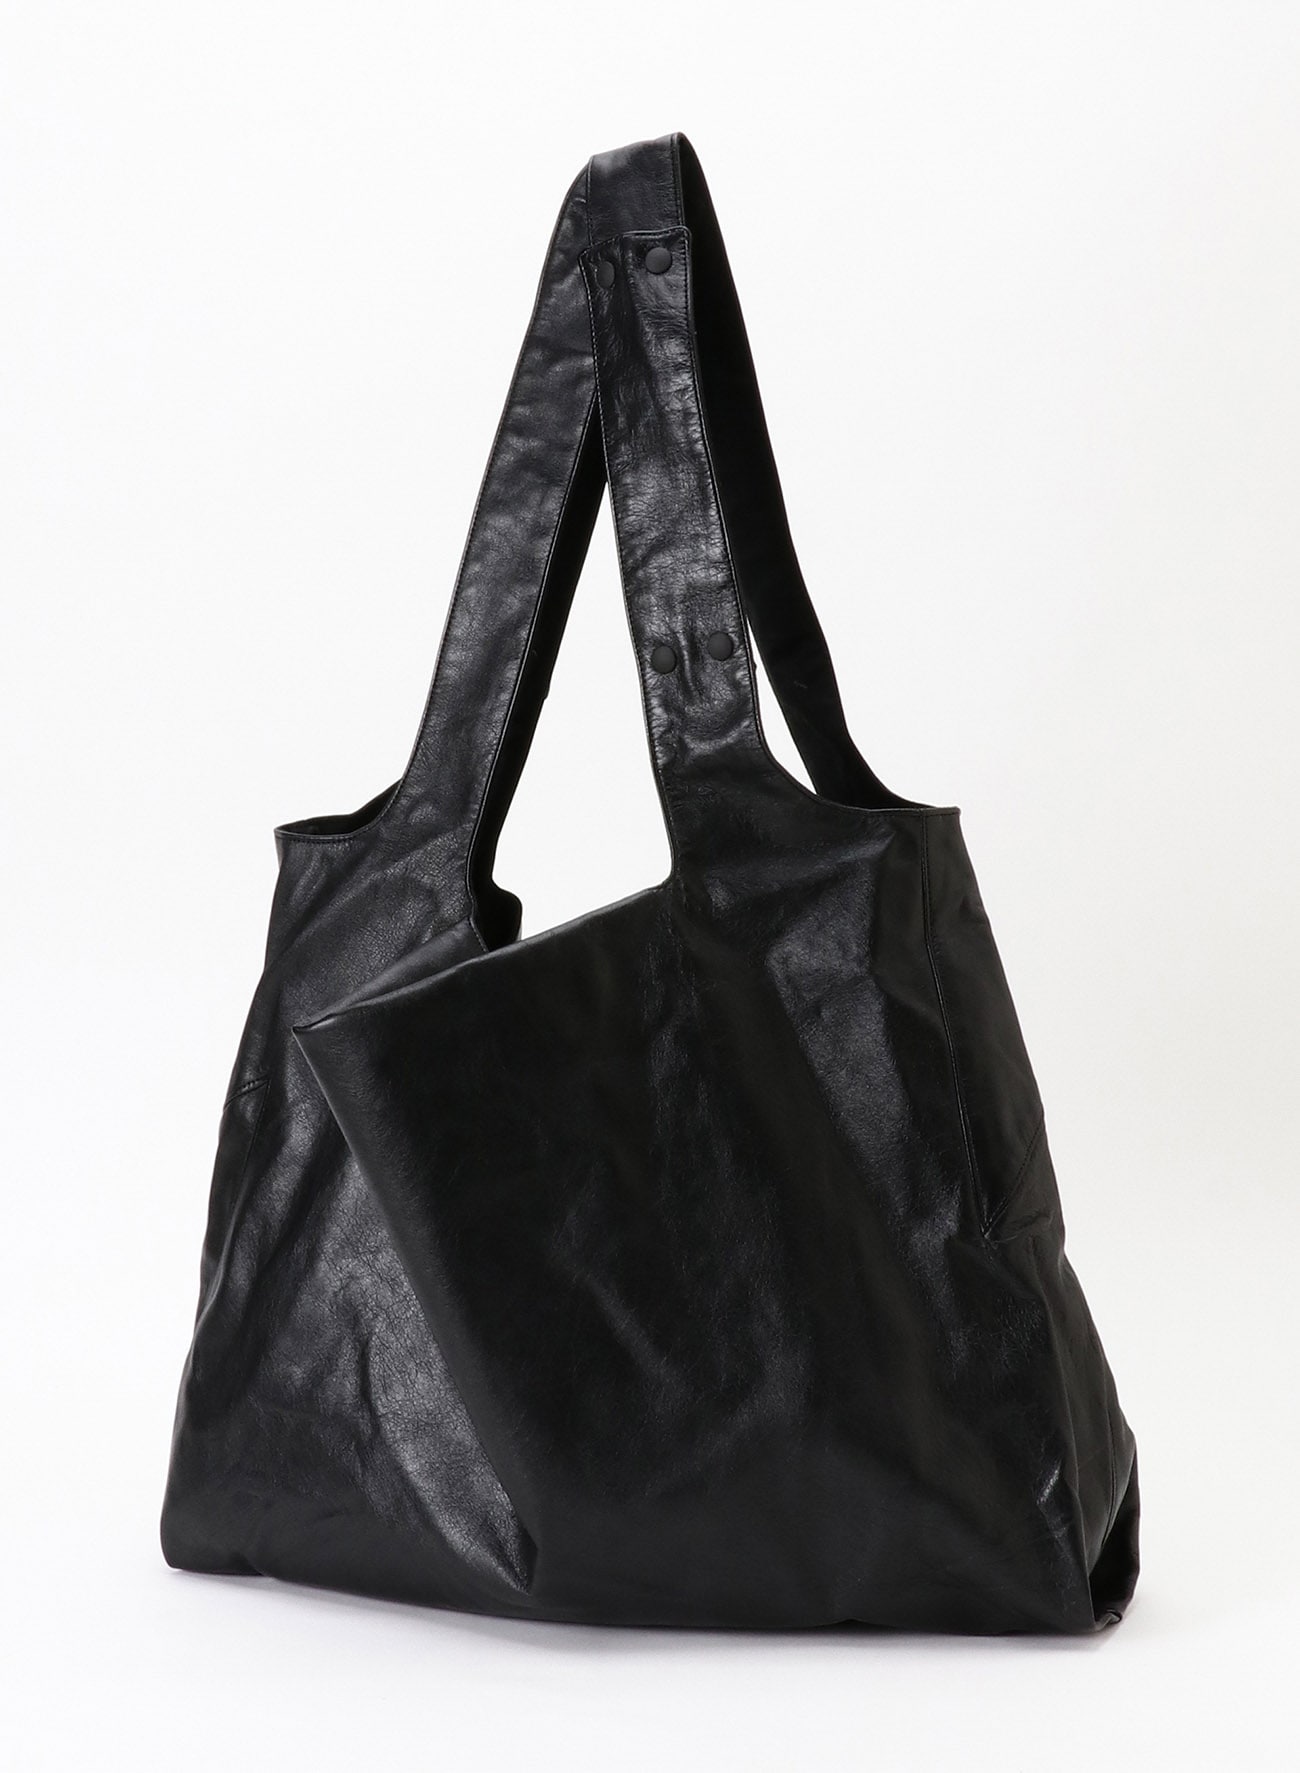 INFINITE (Leather) (FREE SIZE Black): discord Yohji Yamamoto｜ THE 